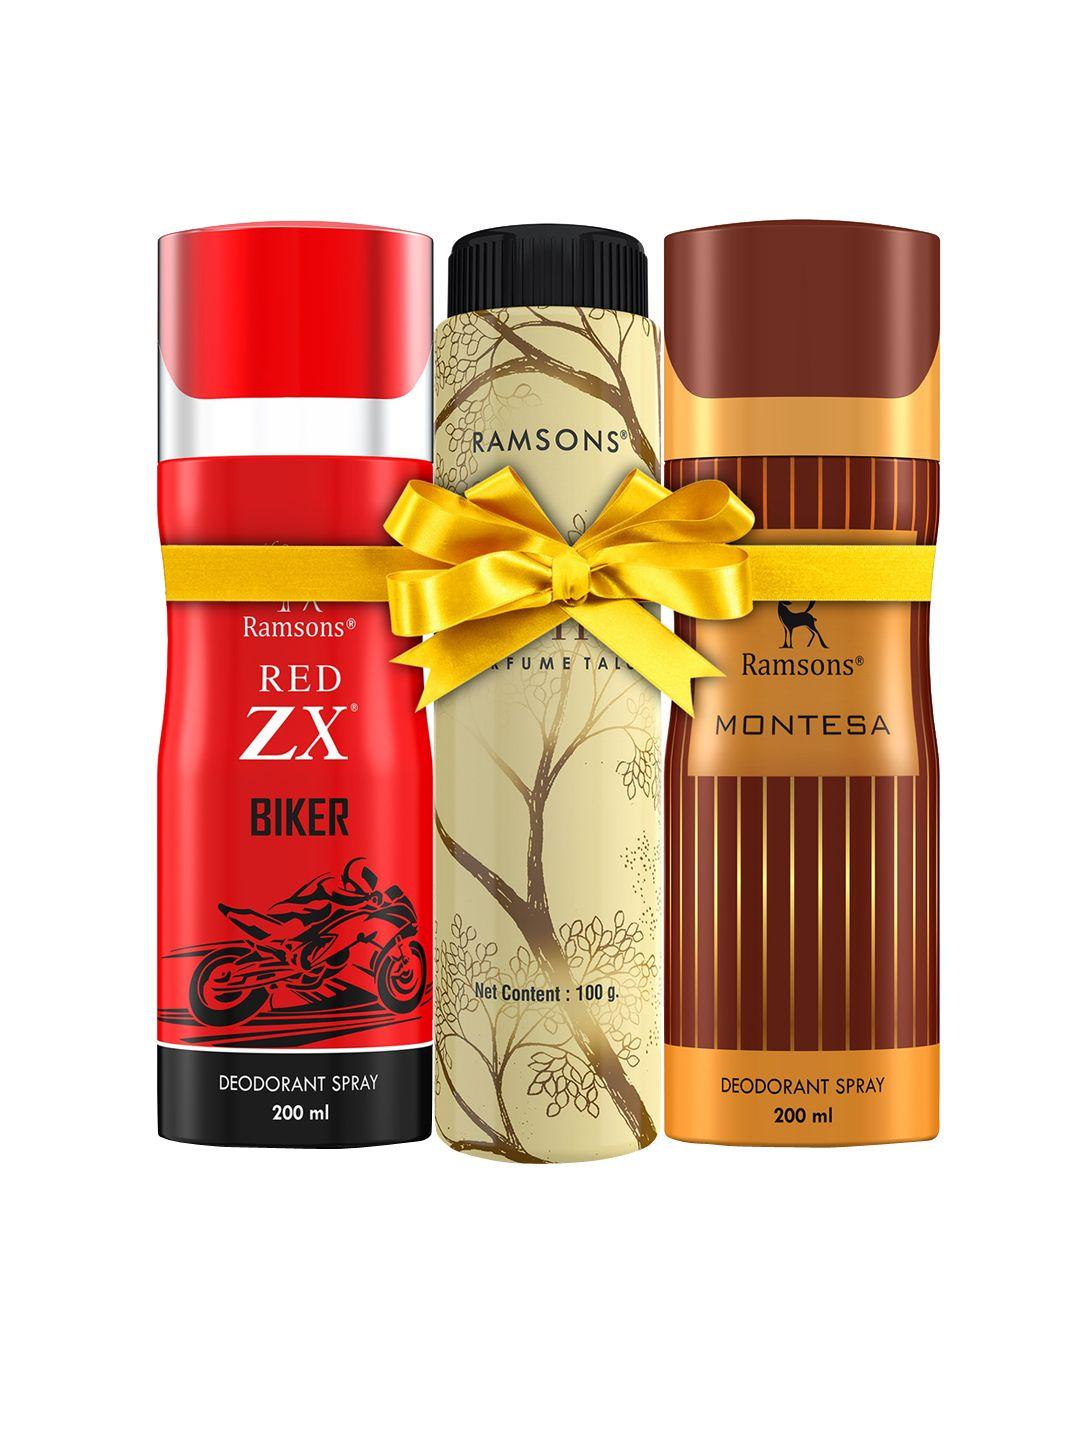 ramsons set of 2 deodorants 200ml each - red zx biker & montesa with exotica talc 100g